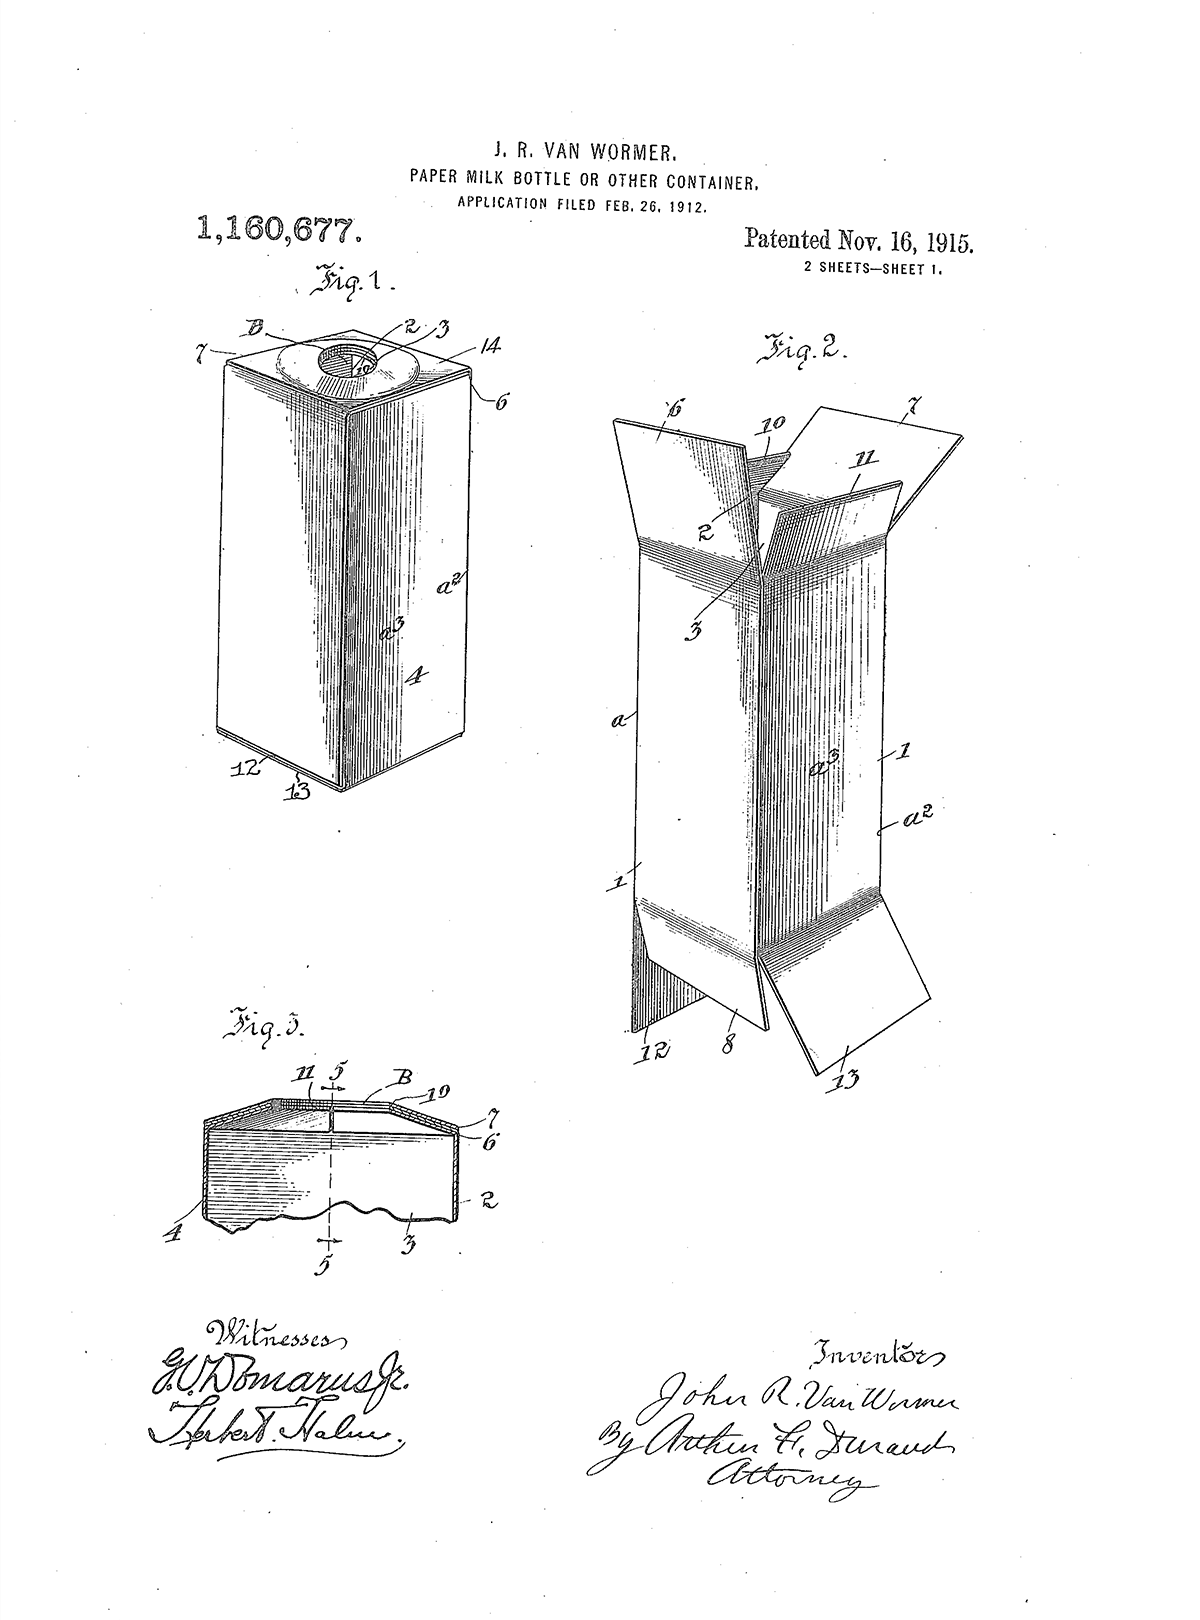 John Van Wormer, “Paper Milk Bottle,” Application 1912, U.S. Patent, November 1915